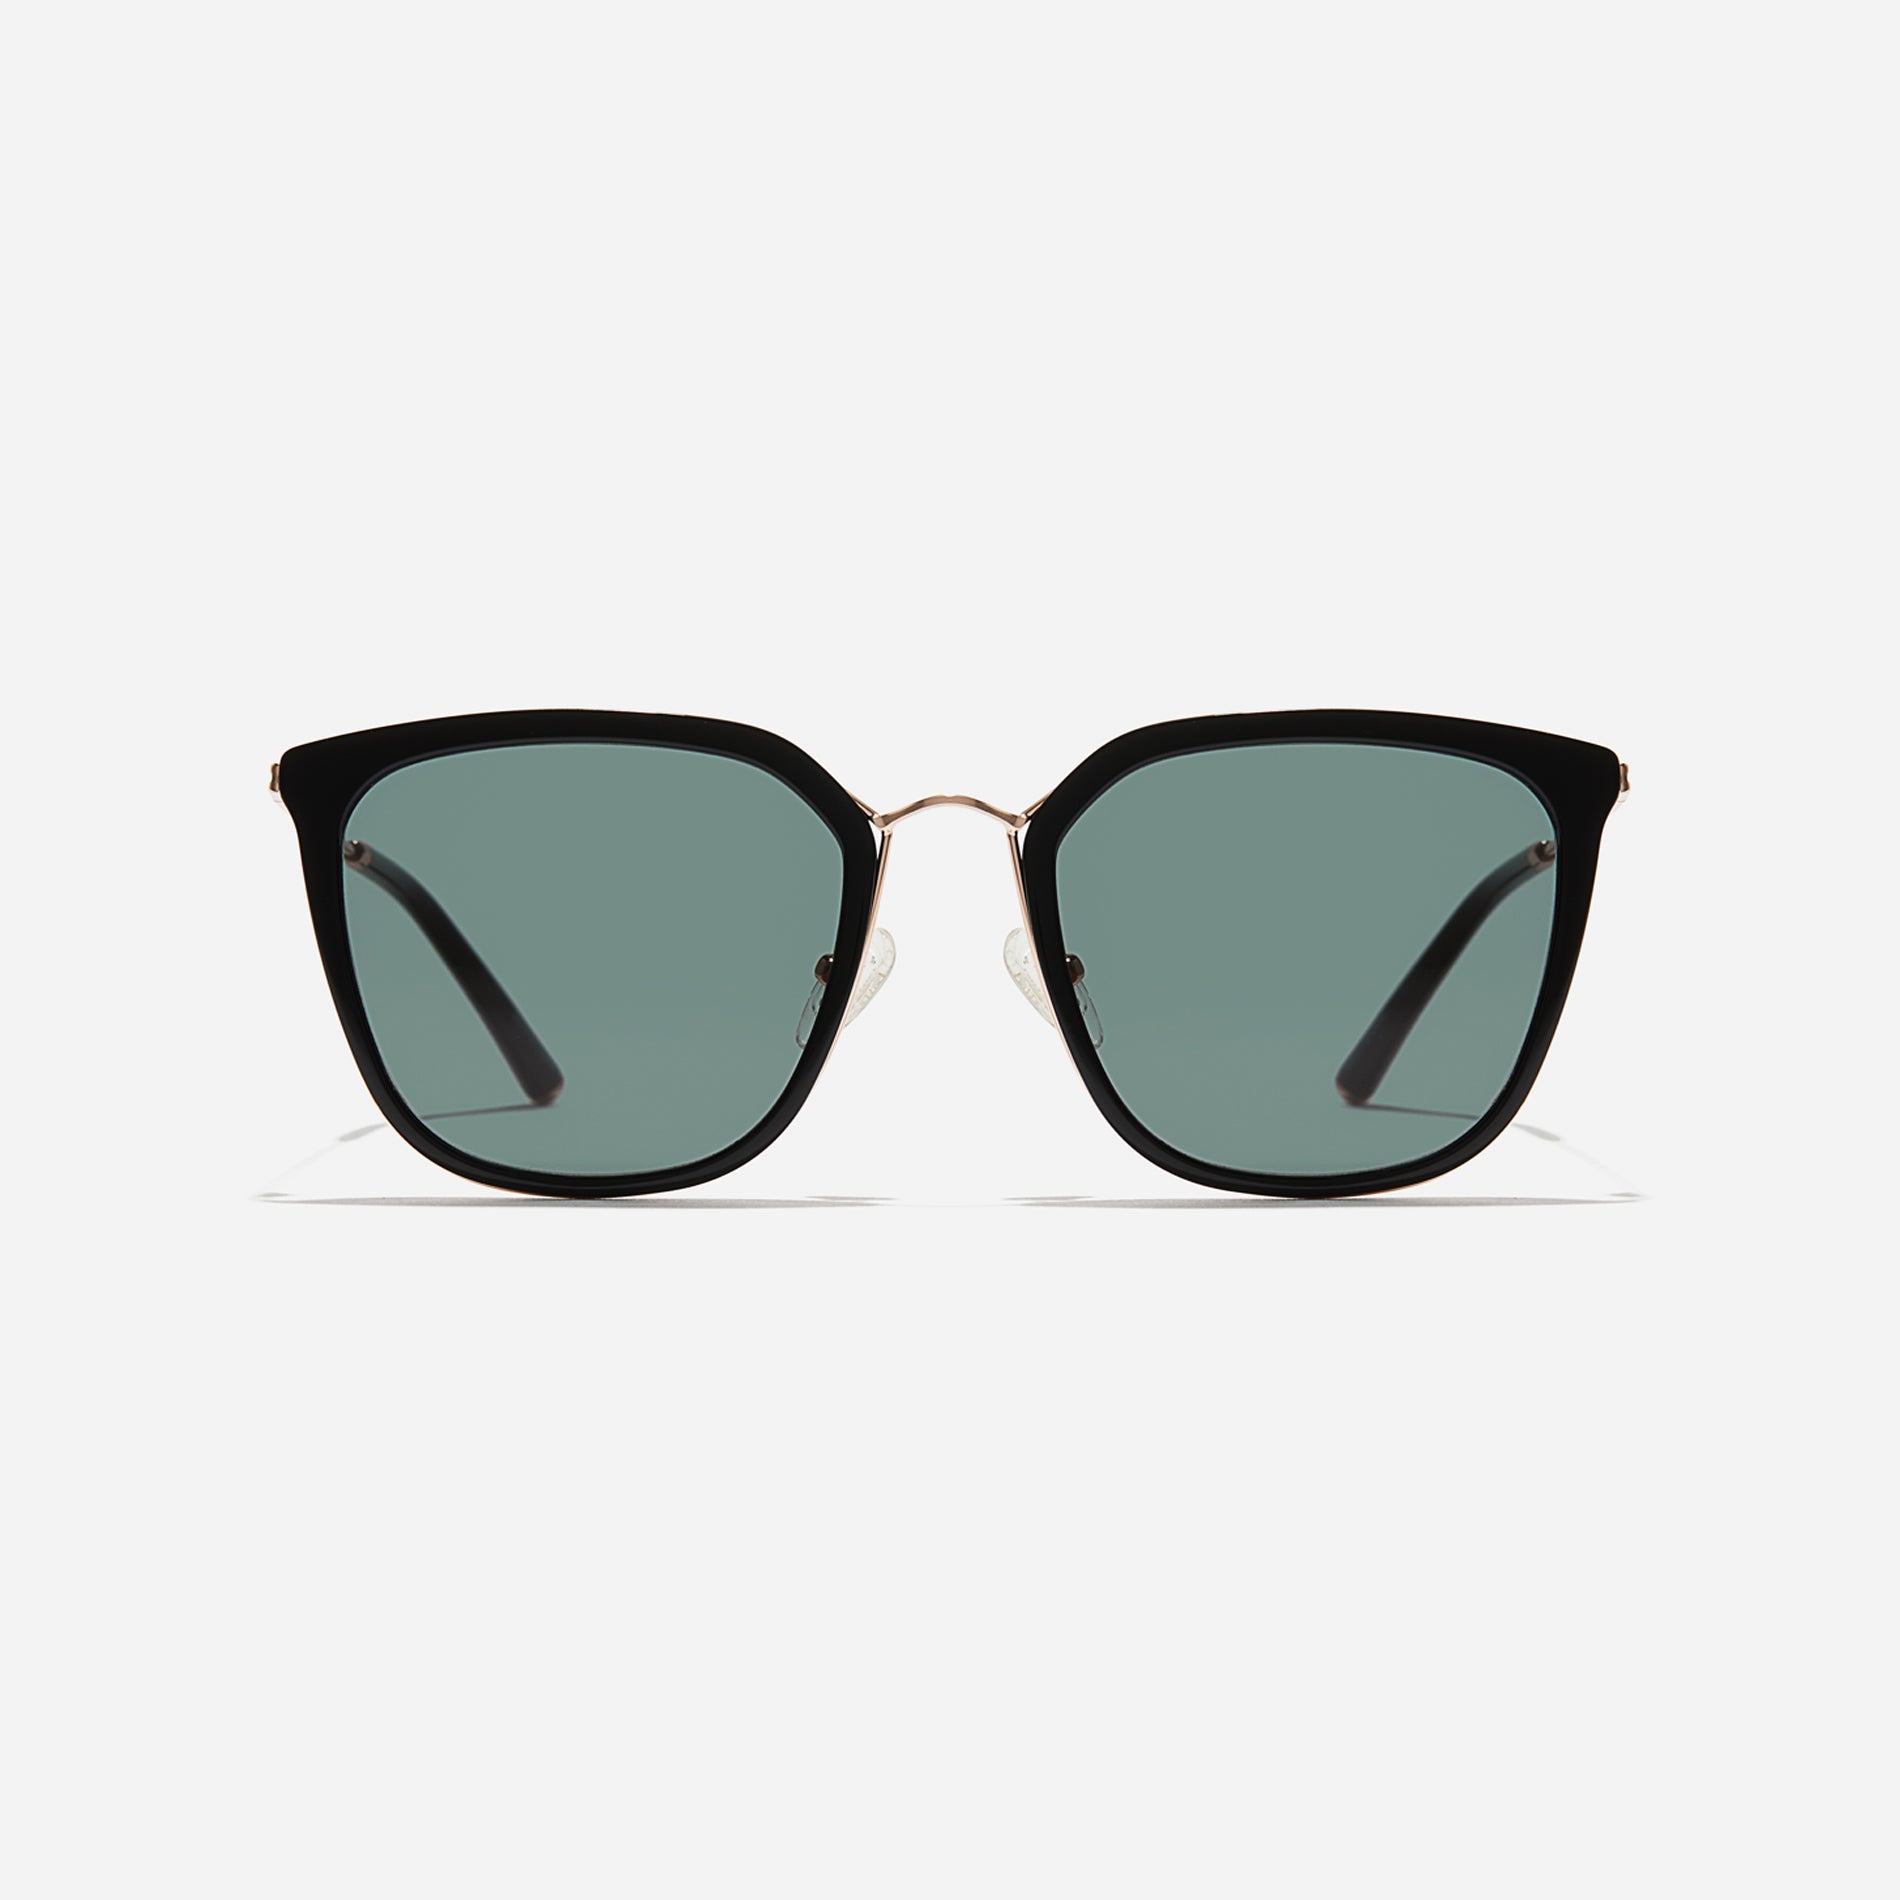  Combination sunglasses featuring flat lenses that ensure 100% UV protection, and unique nose bridge details.